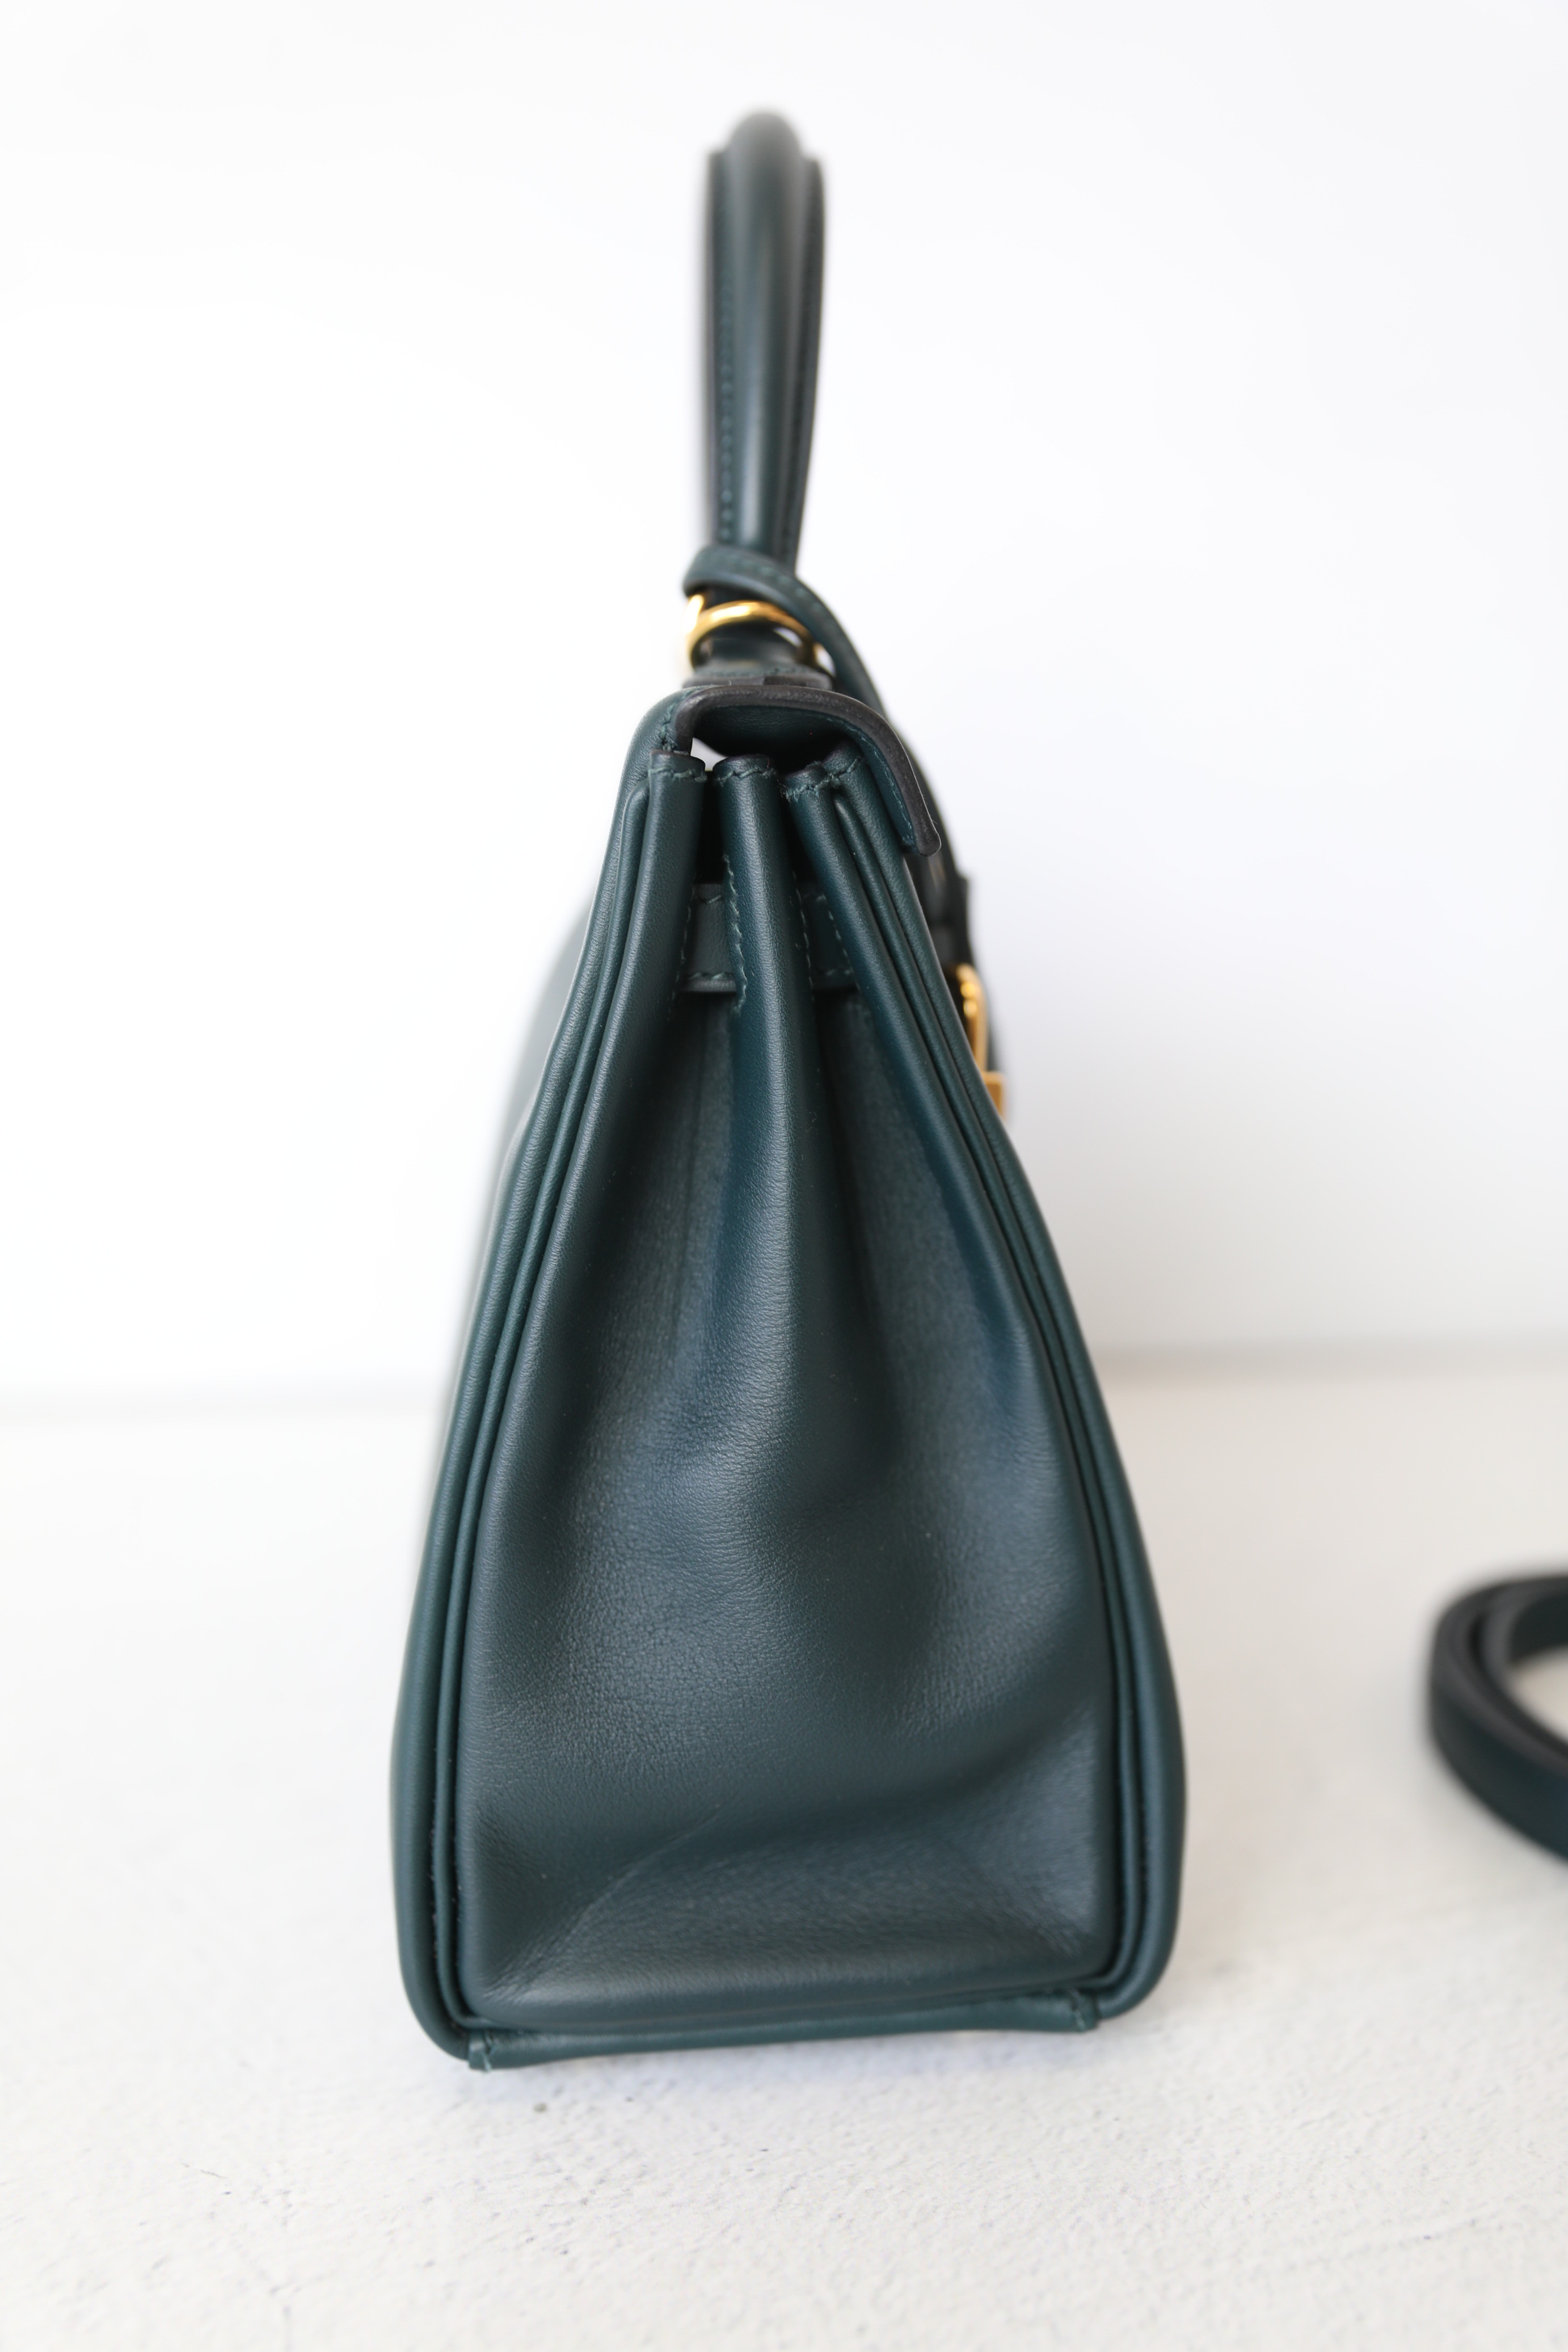 Hermès Kelly 25 Green Leather Handbag (Pre-Owned)